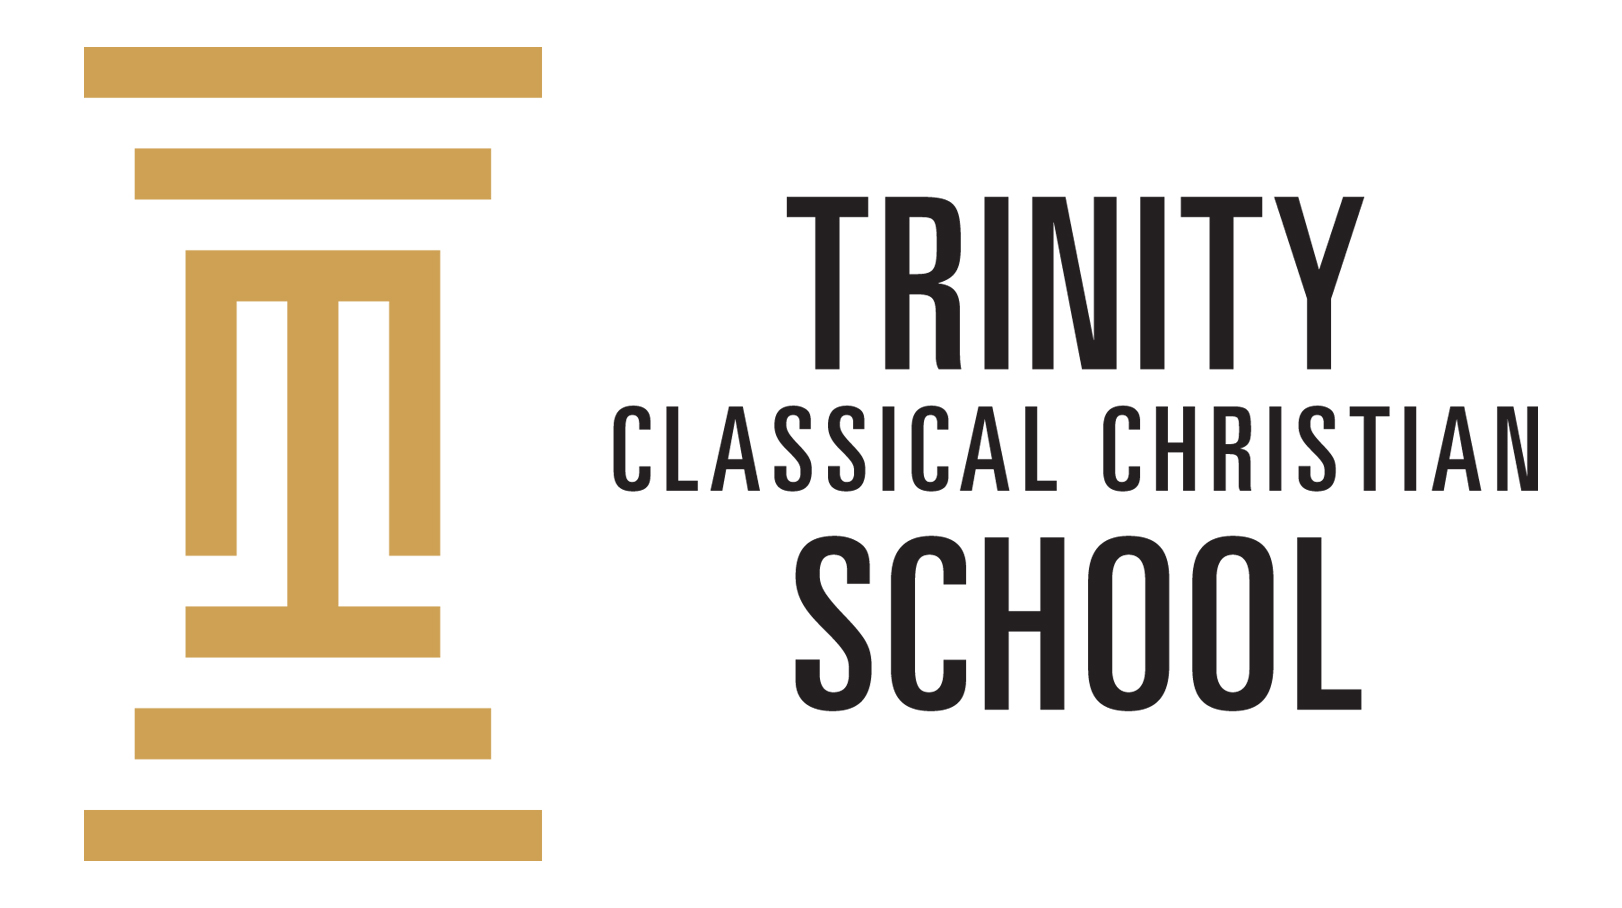 https://trinityclassicalchristianschool.com